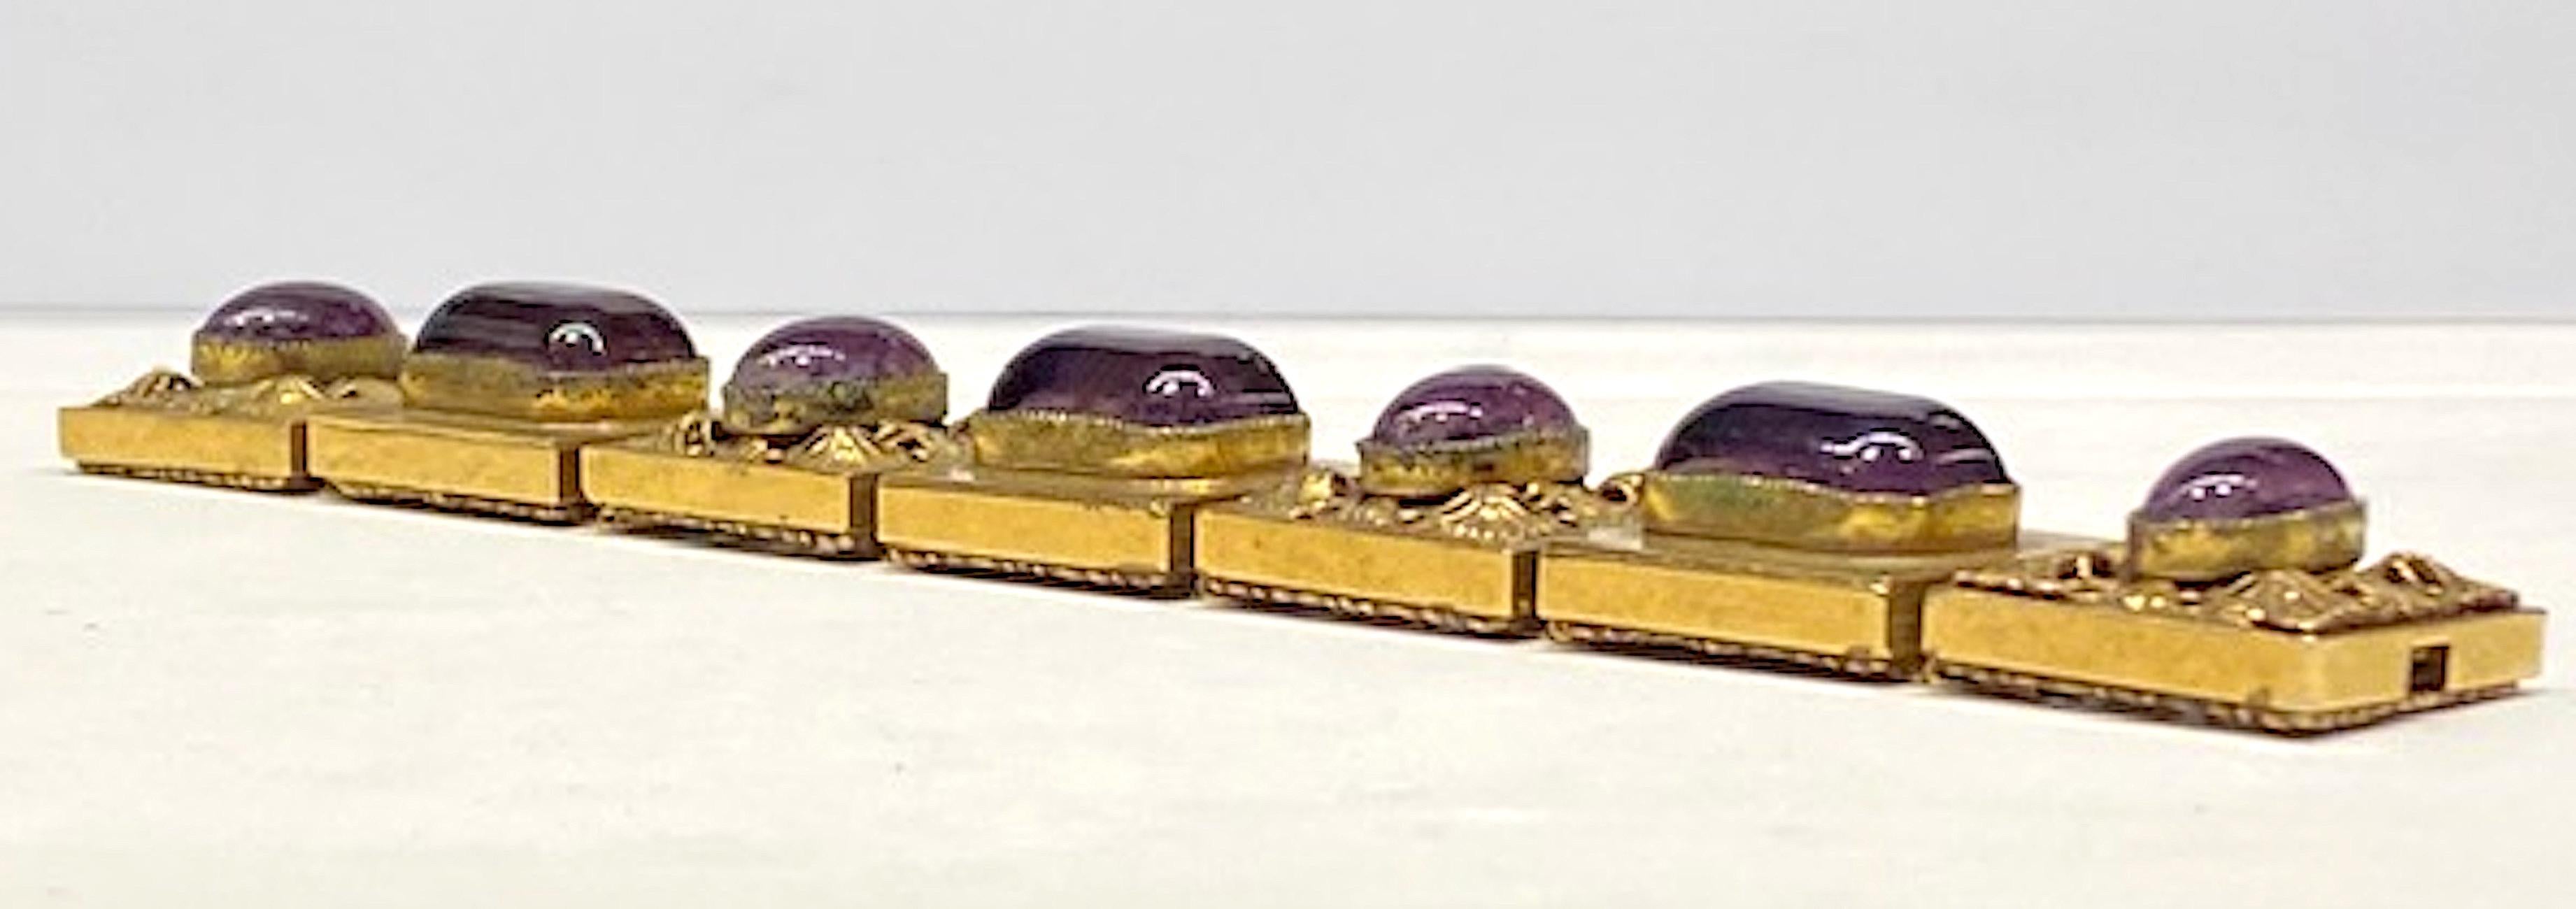 1940s Antique Gold with Purple Cabs Bracelet 8